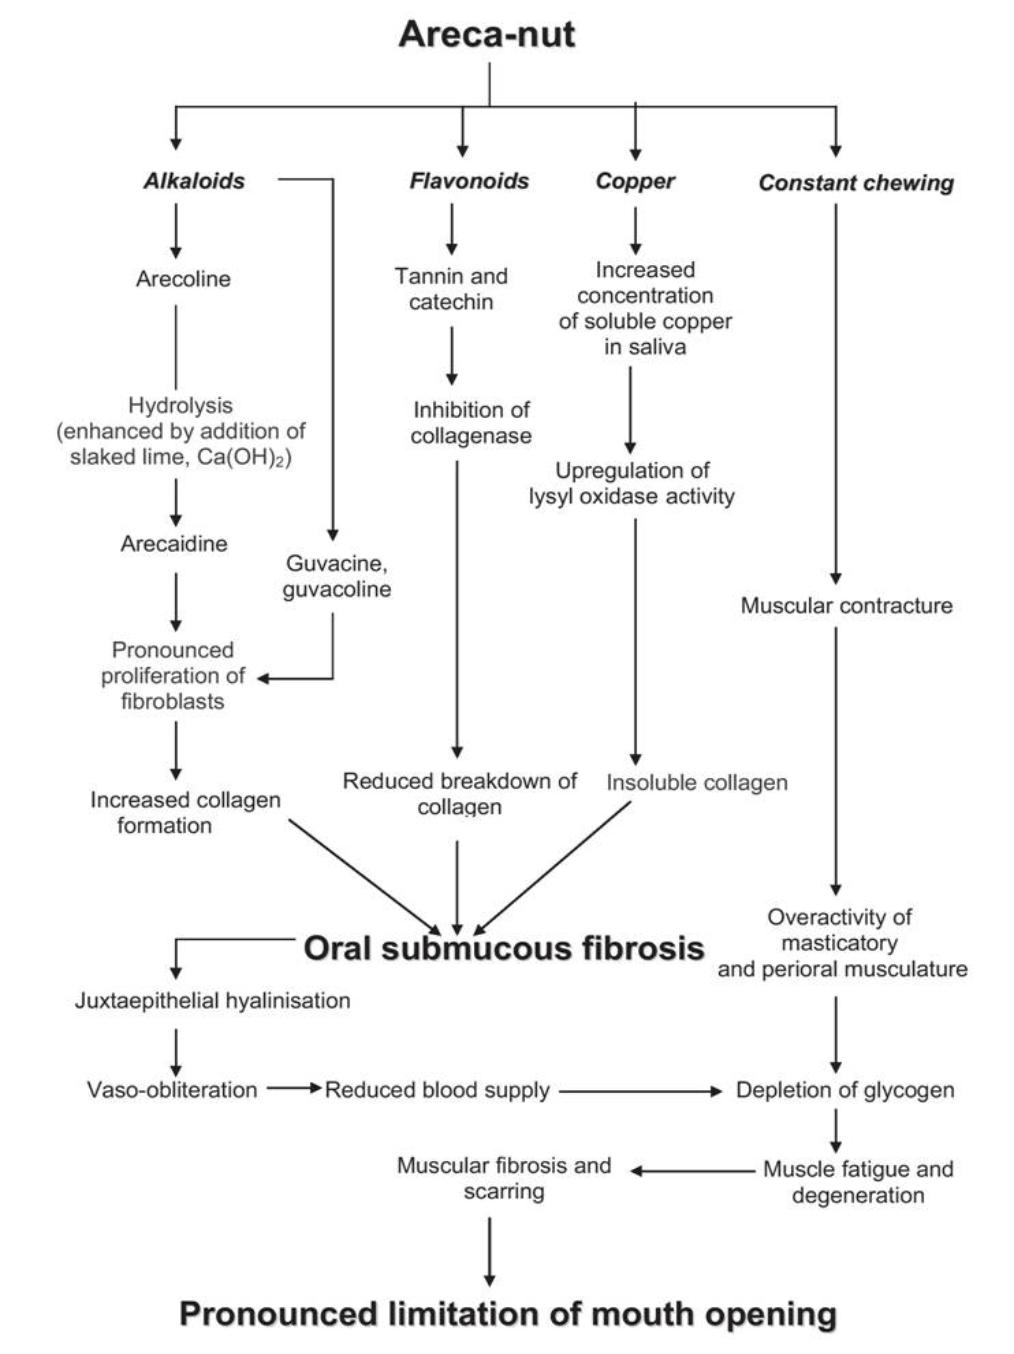 Role_of_Areca_Nut_in_Pathogenesis_of_Oral_Submucous_Fibrosis-1014x1354